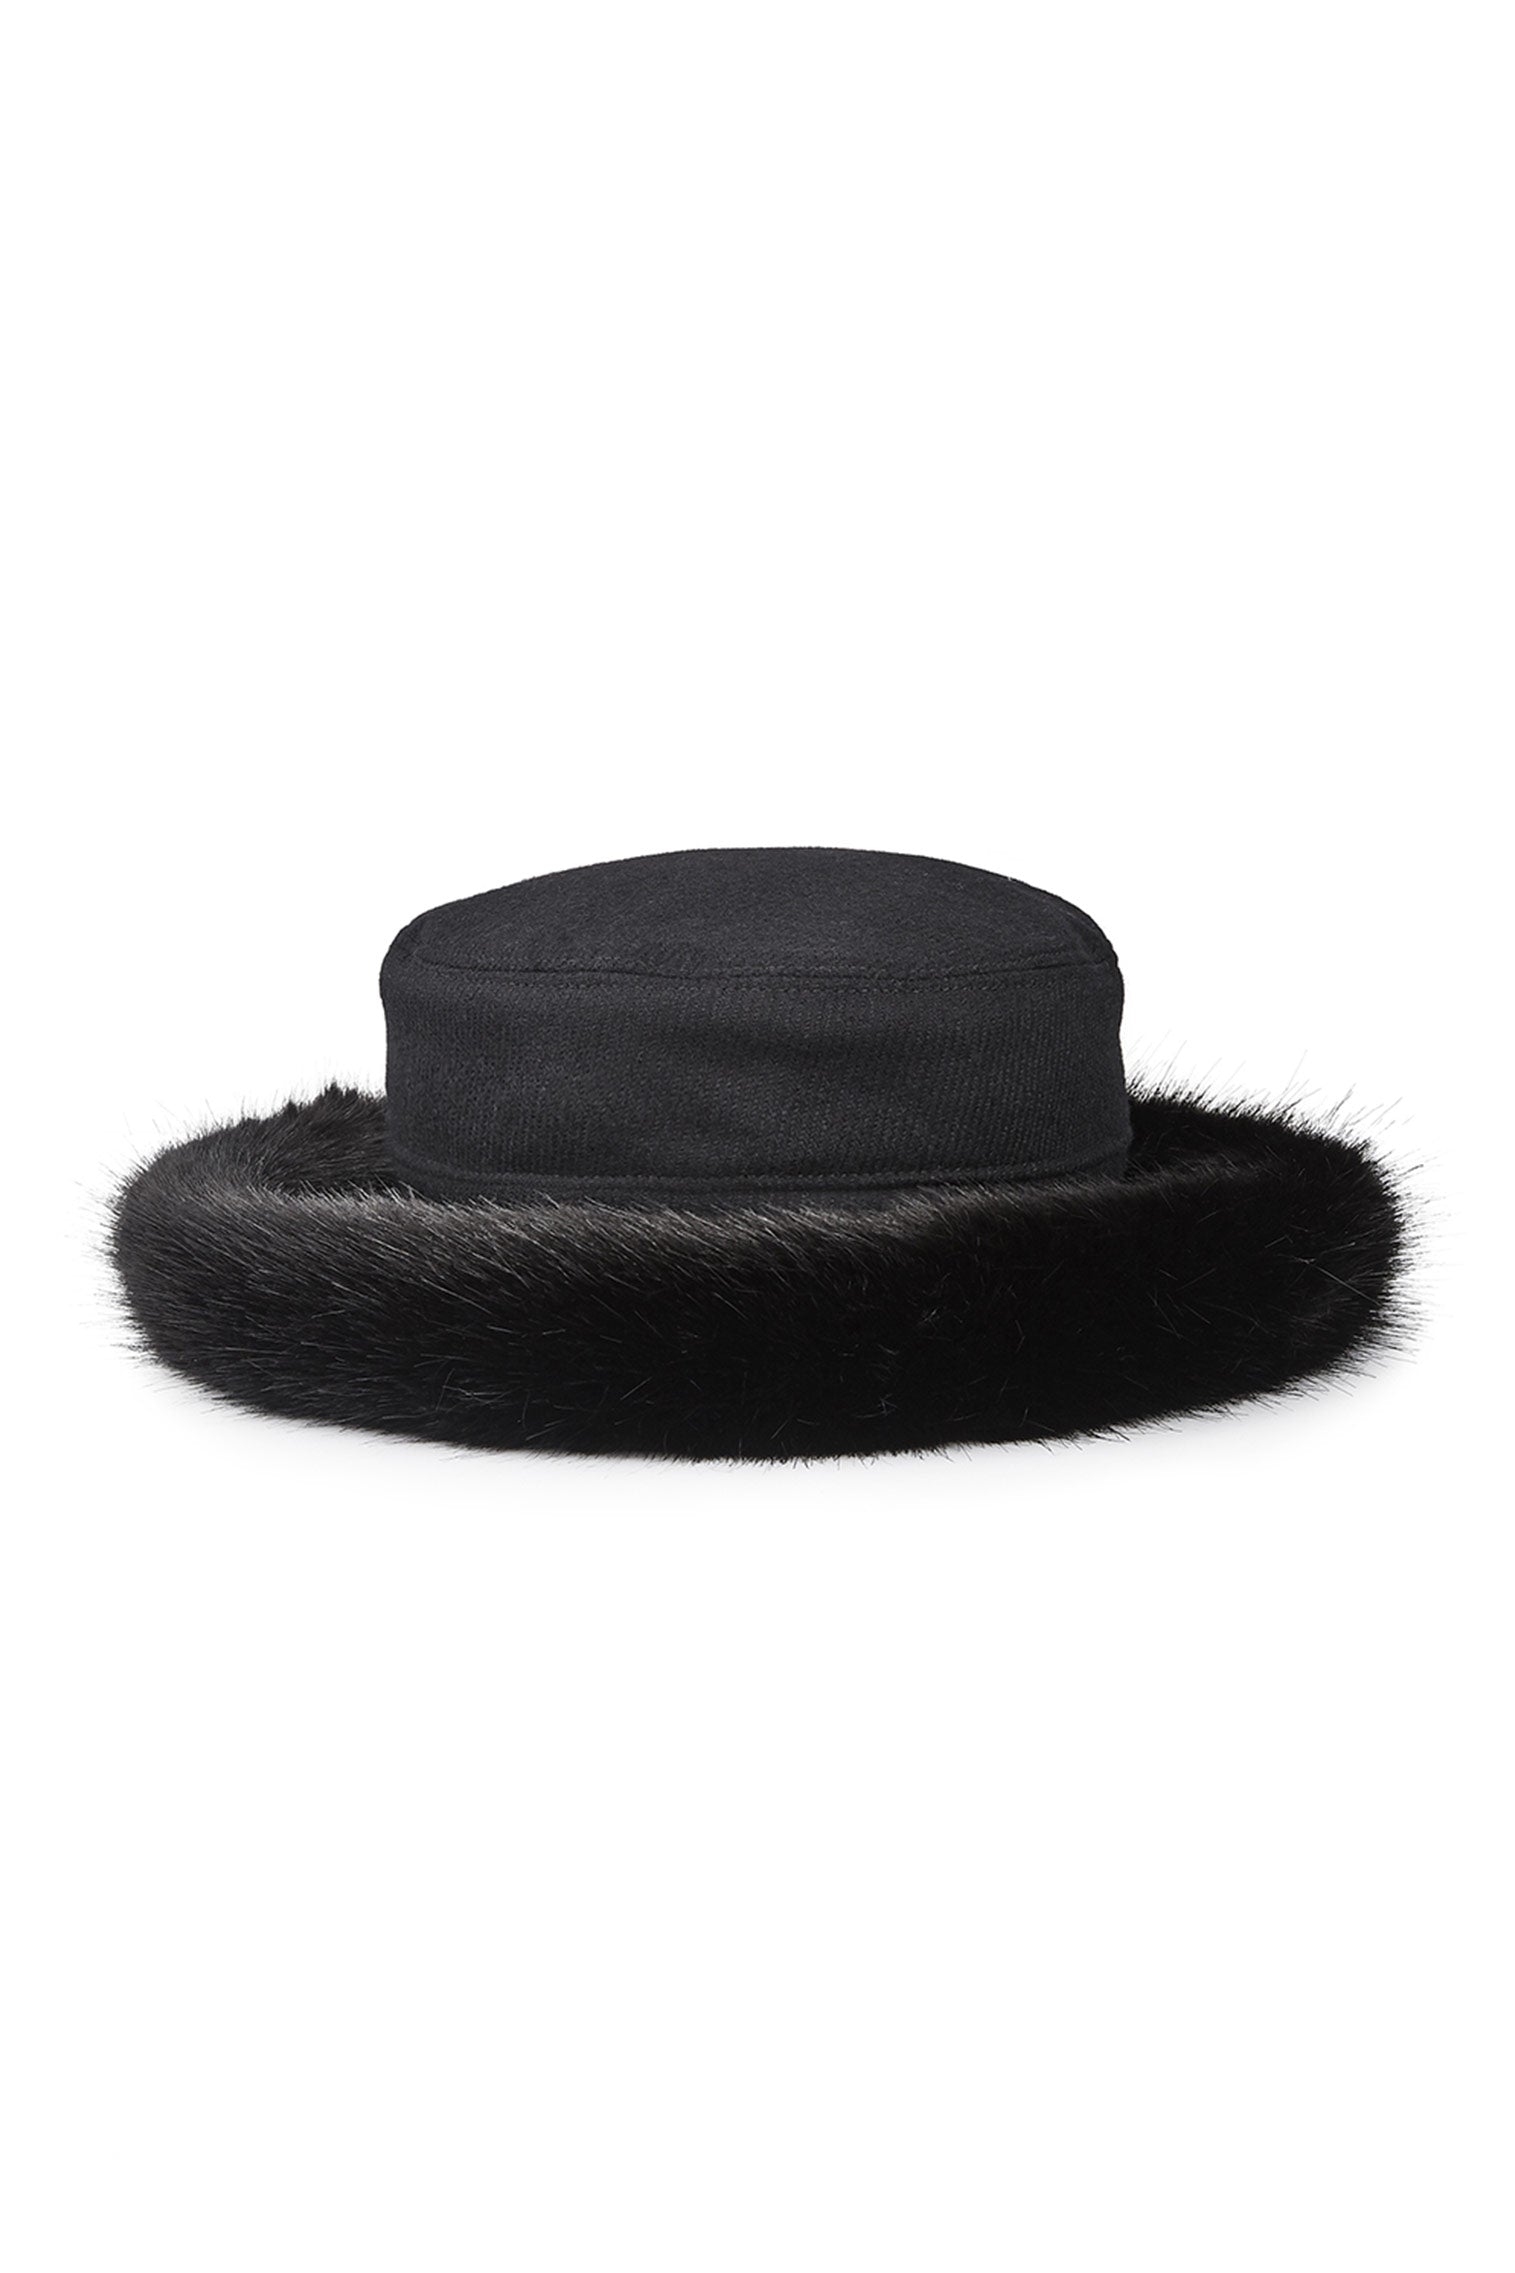 Estate Faux Fur Hat - Products - Lock & Co. Hatters London UK